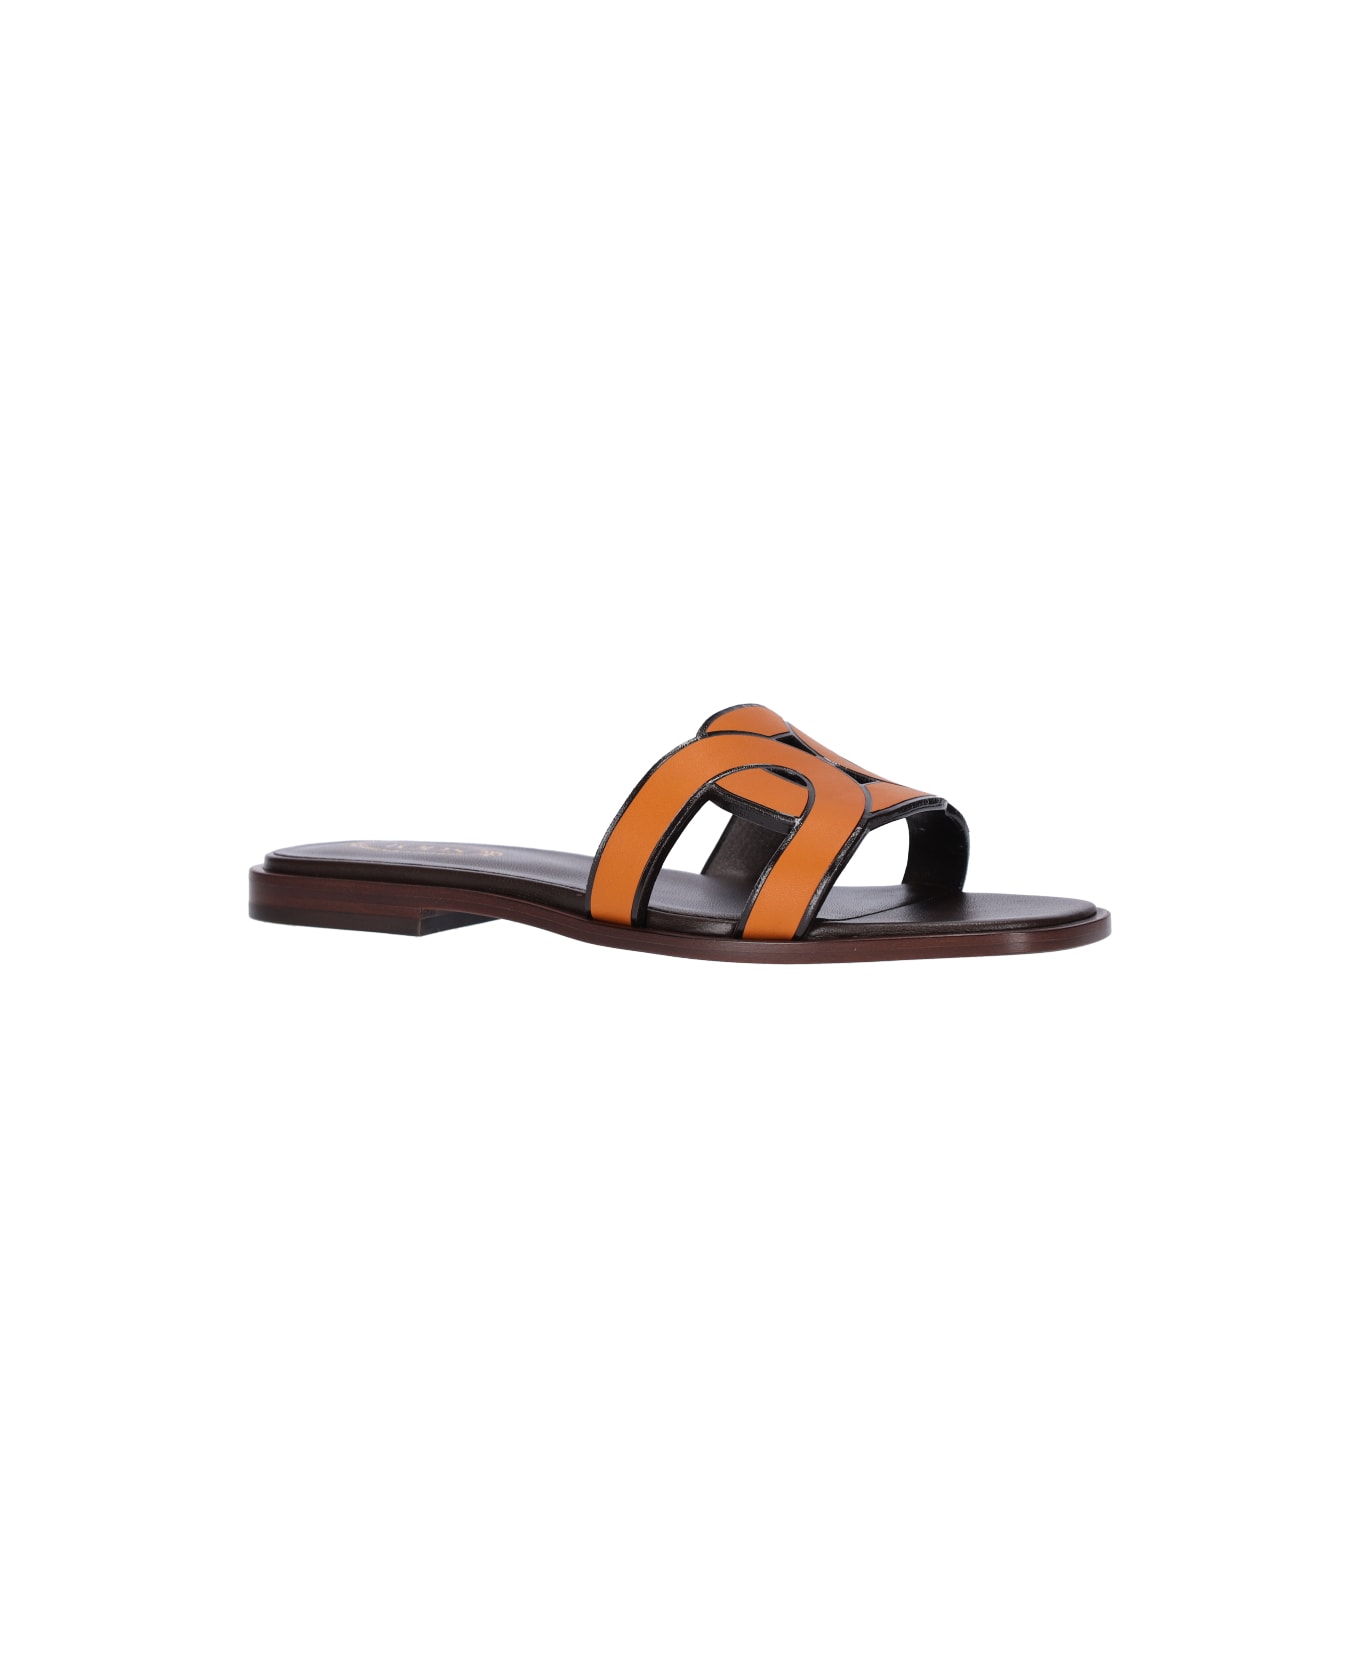 Tod's Shaped Sandals - Orange